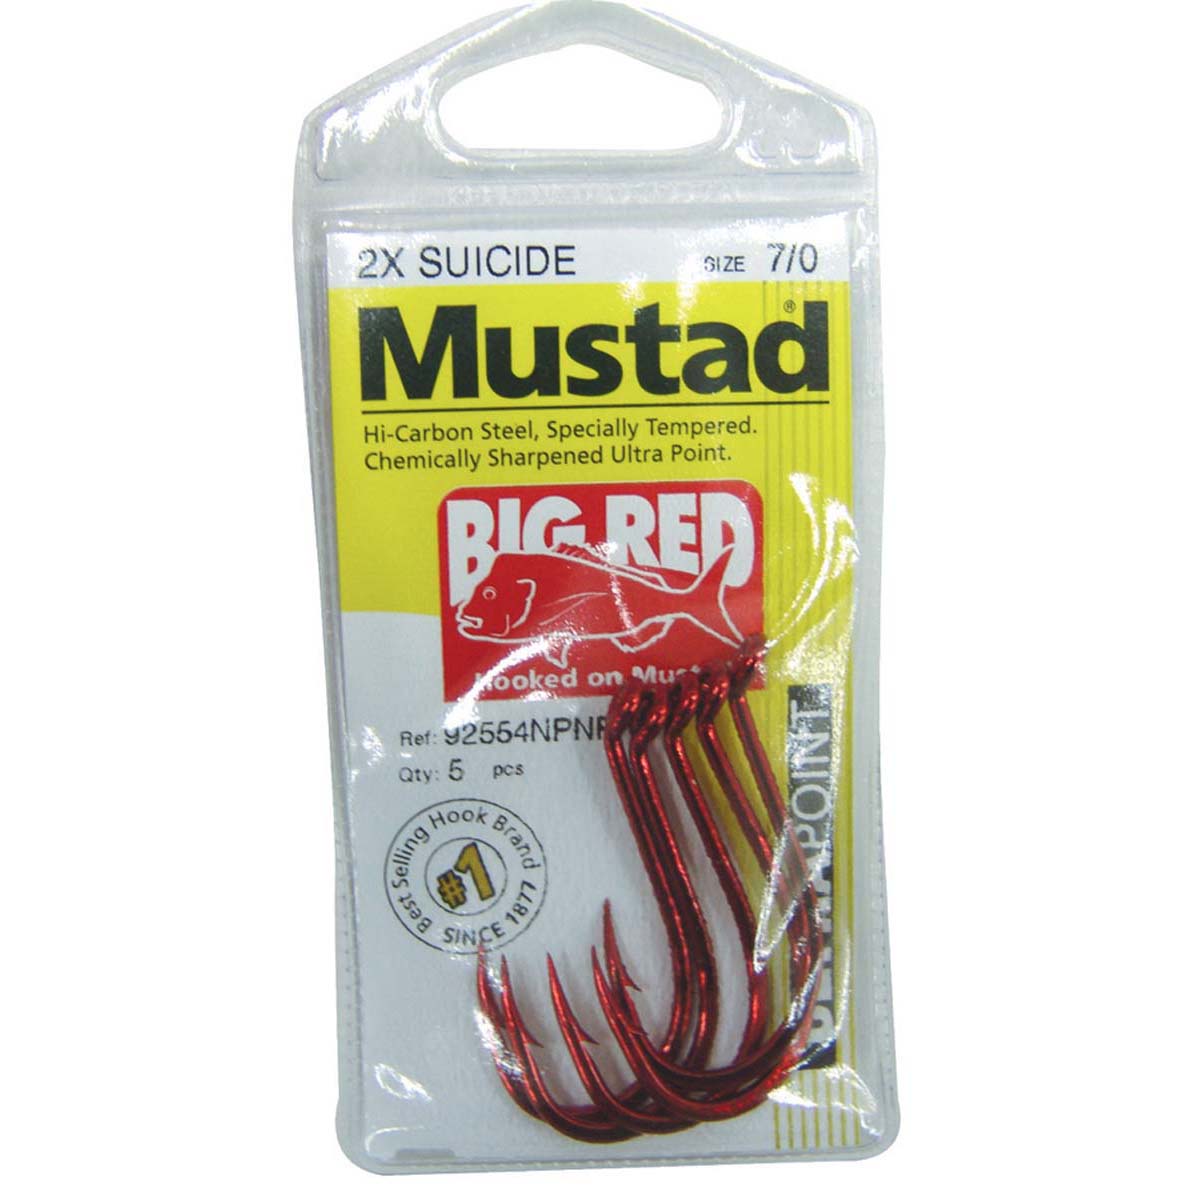 Mustad Big Red Suicide Hooks 7 / 0 5 Pack